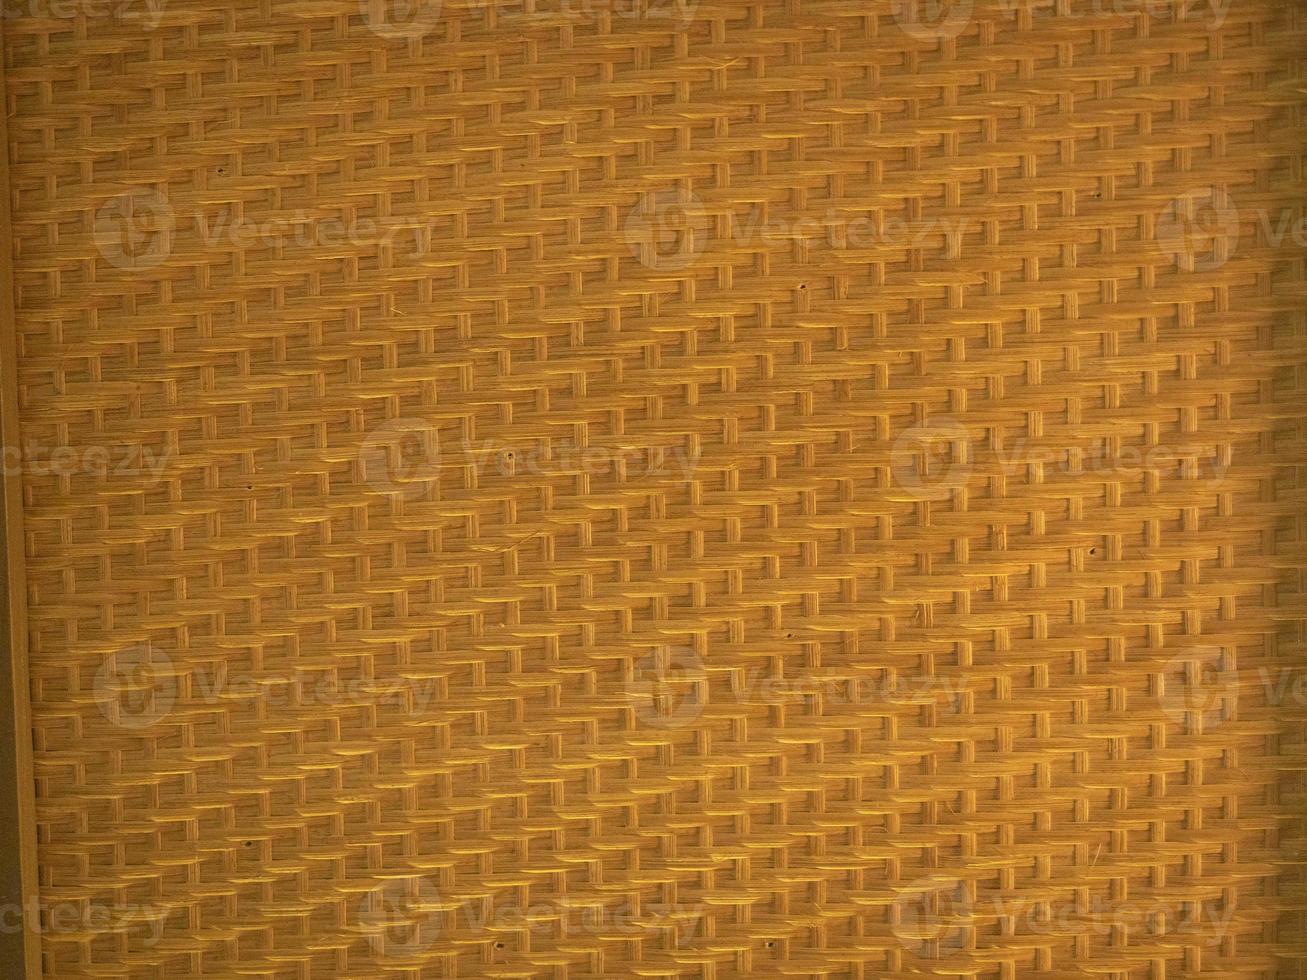 Brown yellow orange color texture pattern abstract background design material grunge surface rough vintage wallpaper antique old backdrop wooden detail frame panel demaged floor hardwood beige art photo